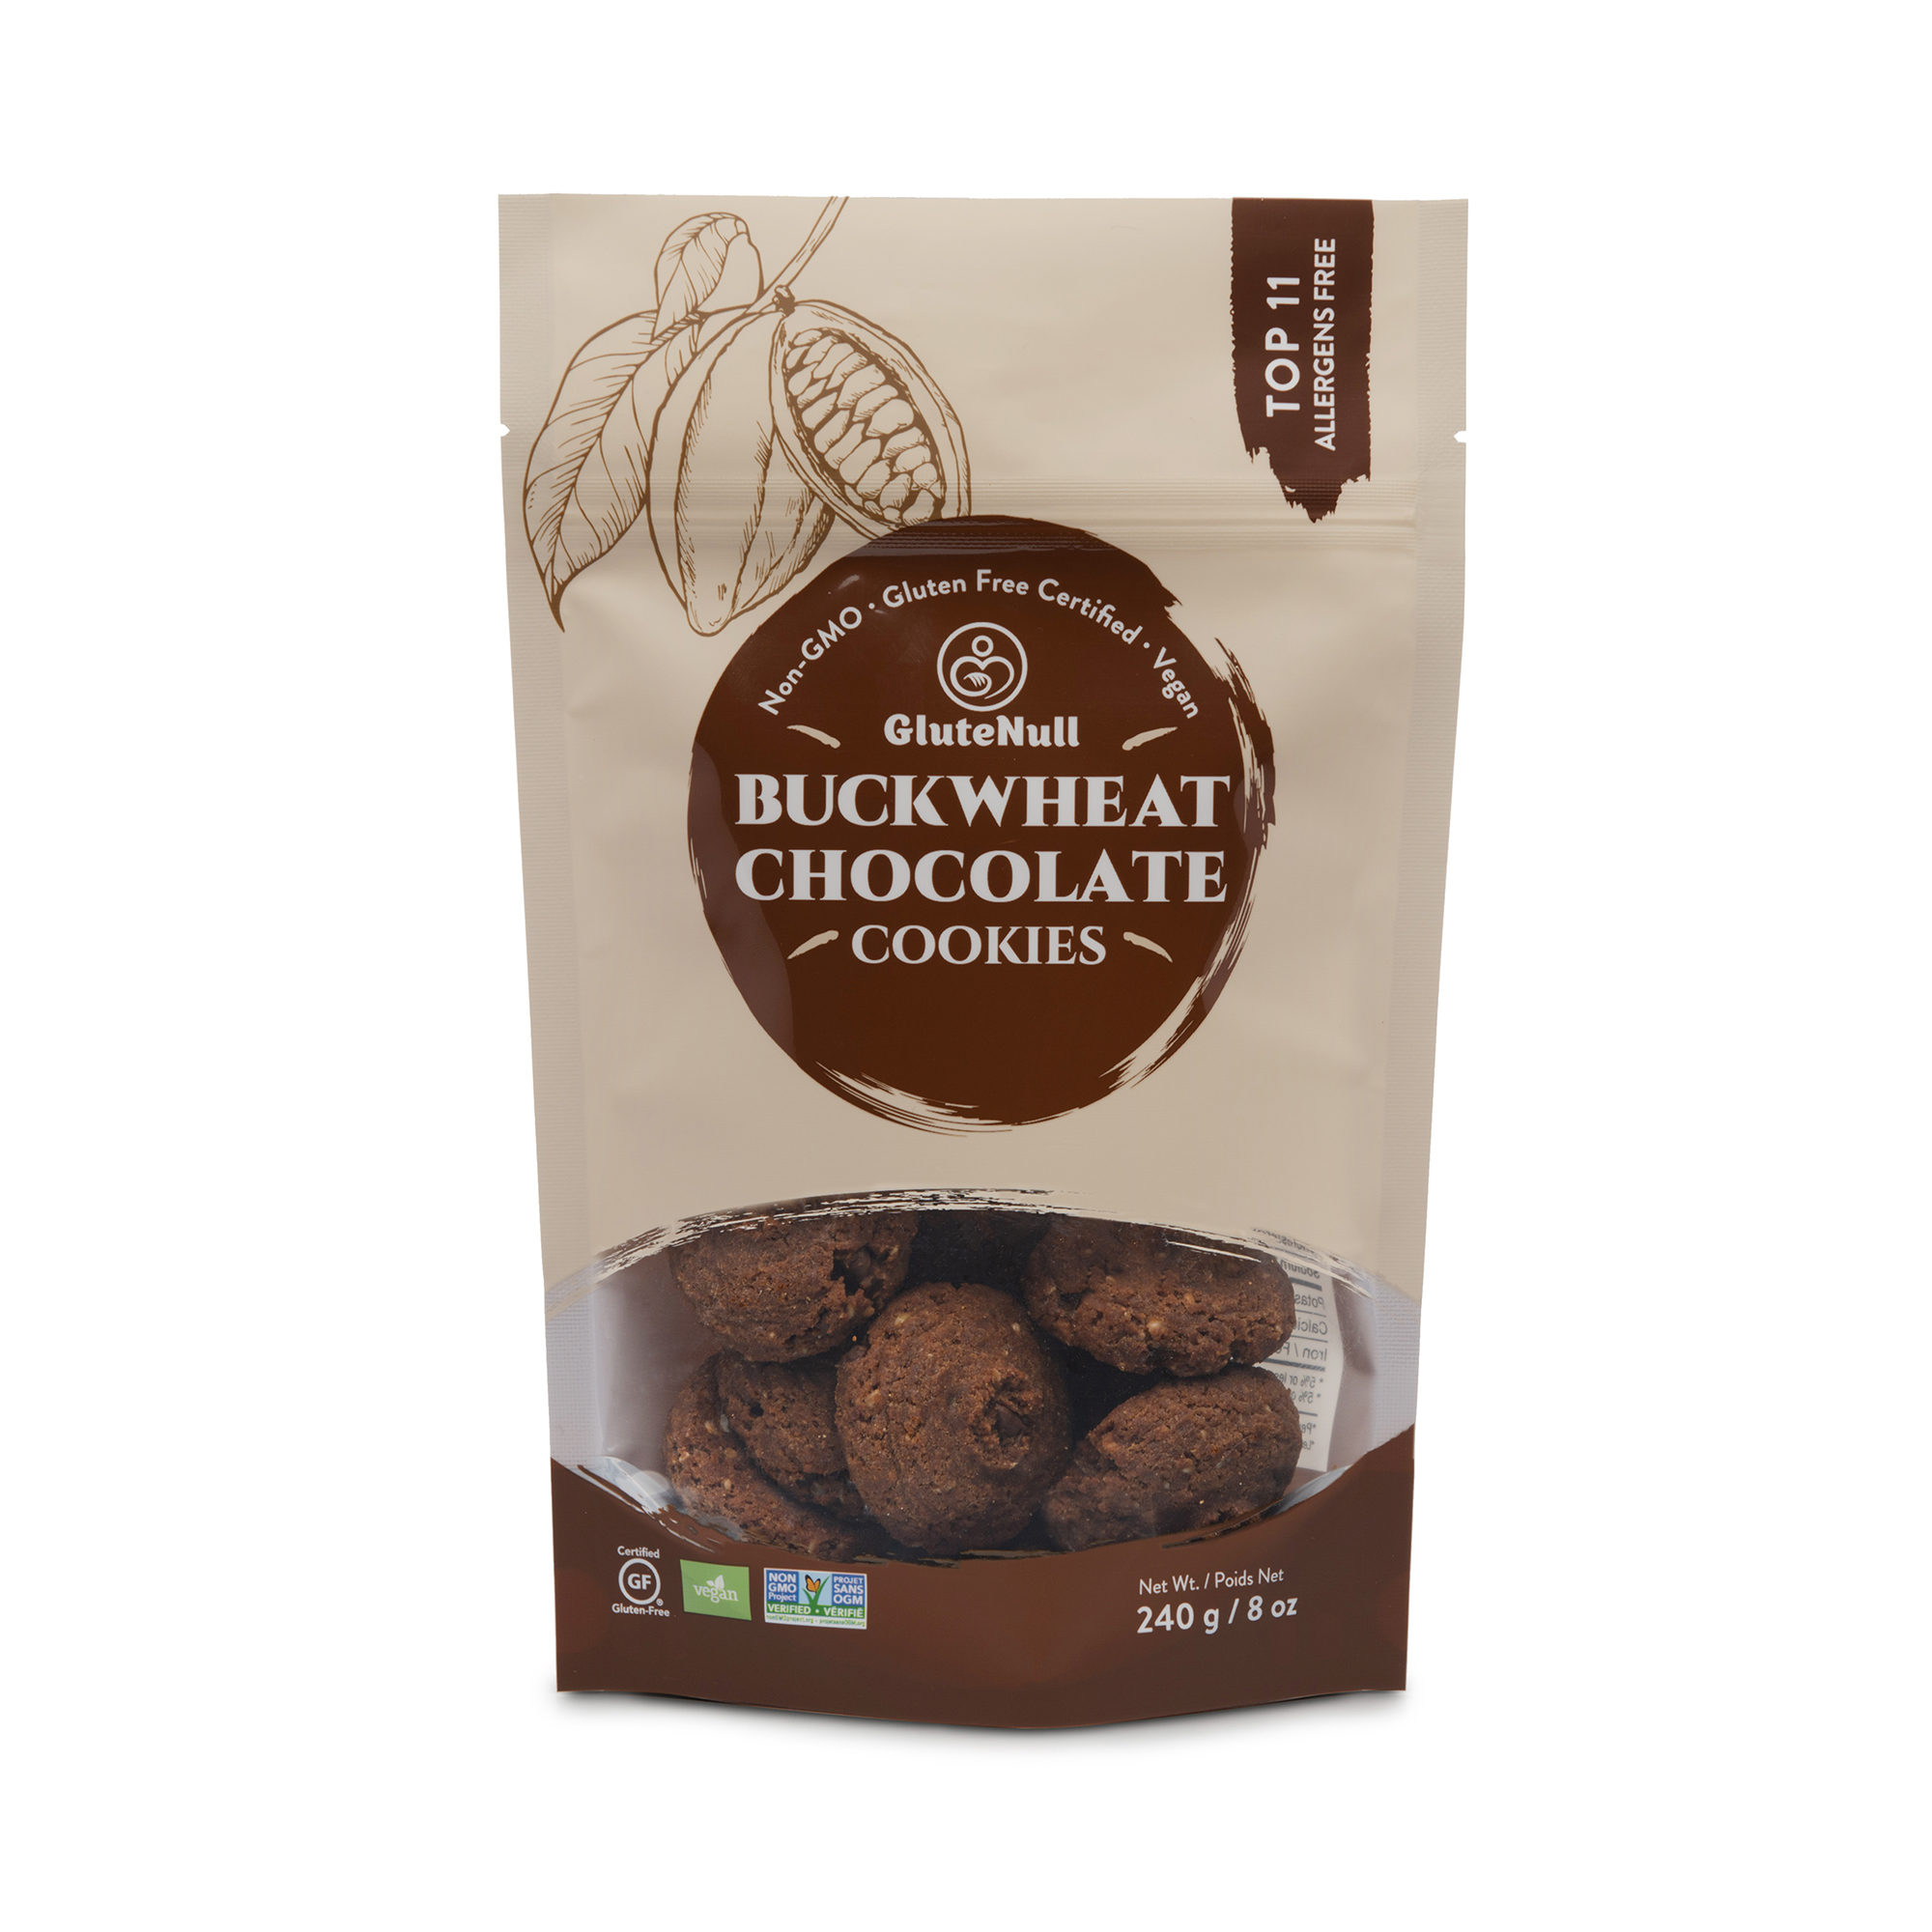 Buckwheat Chocolate Gluten Free Vegan Cookies